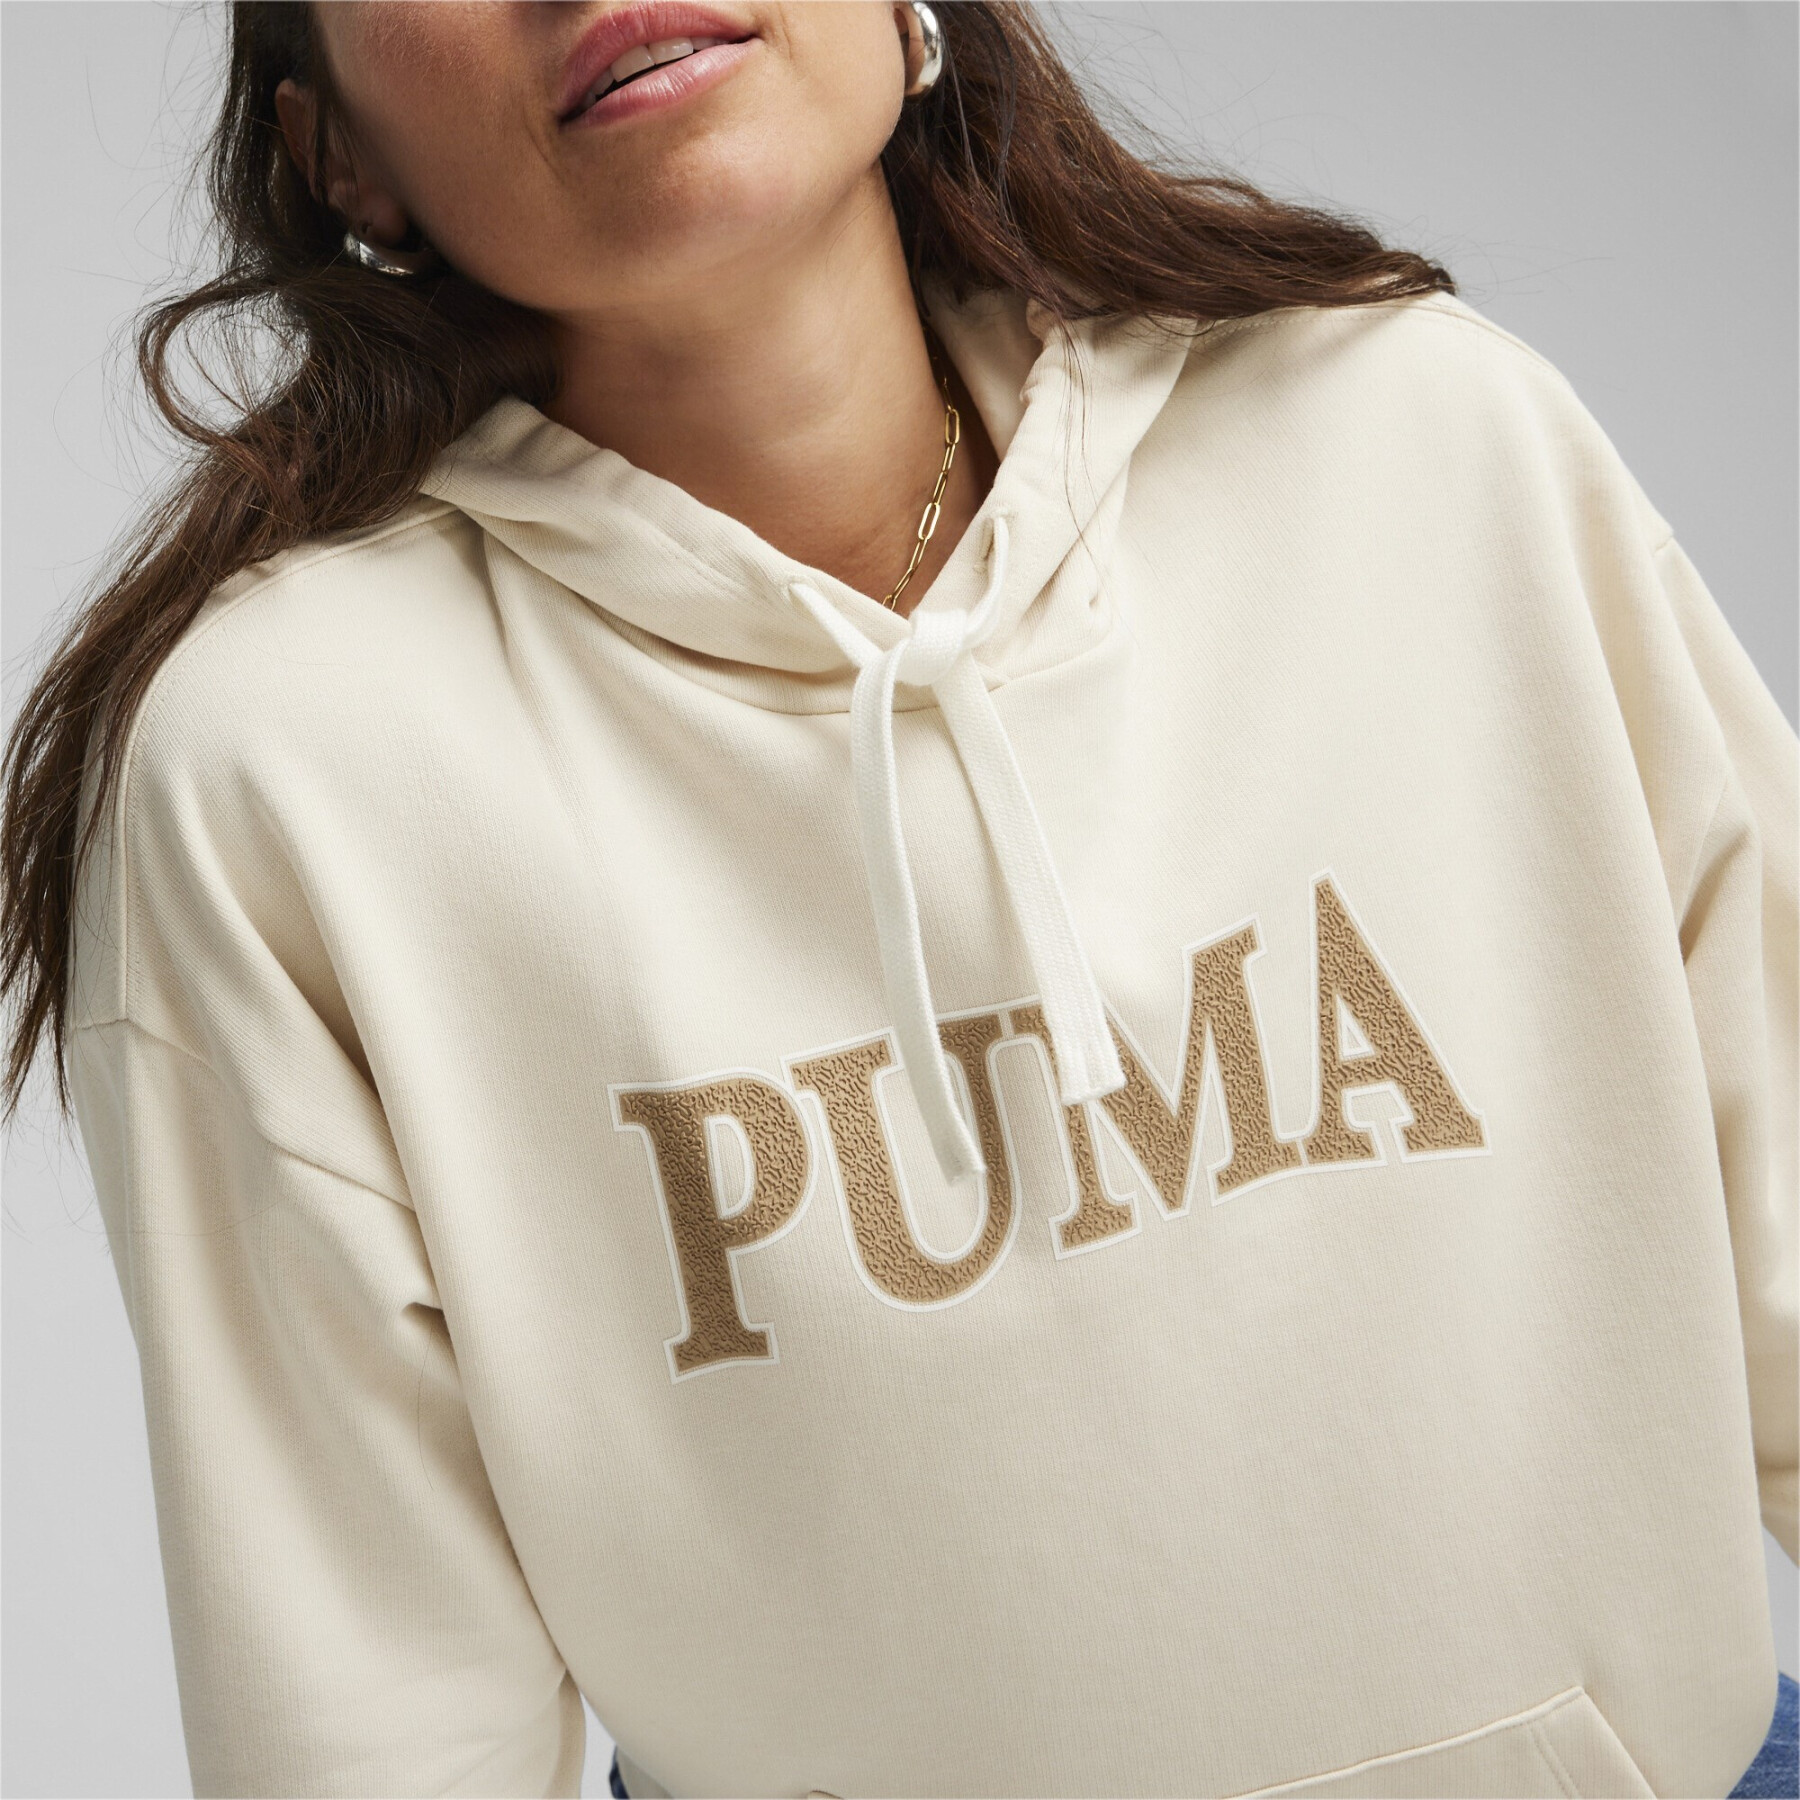 Women's hooded sweatshirt Puma Squad